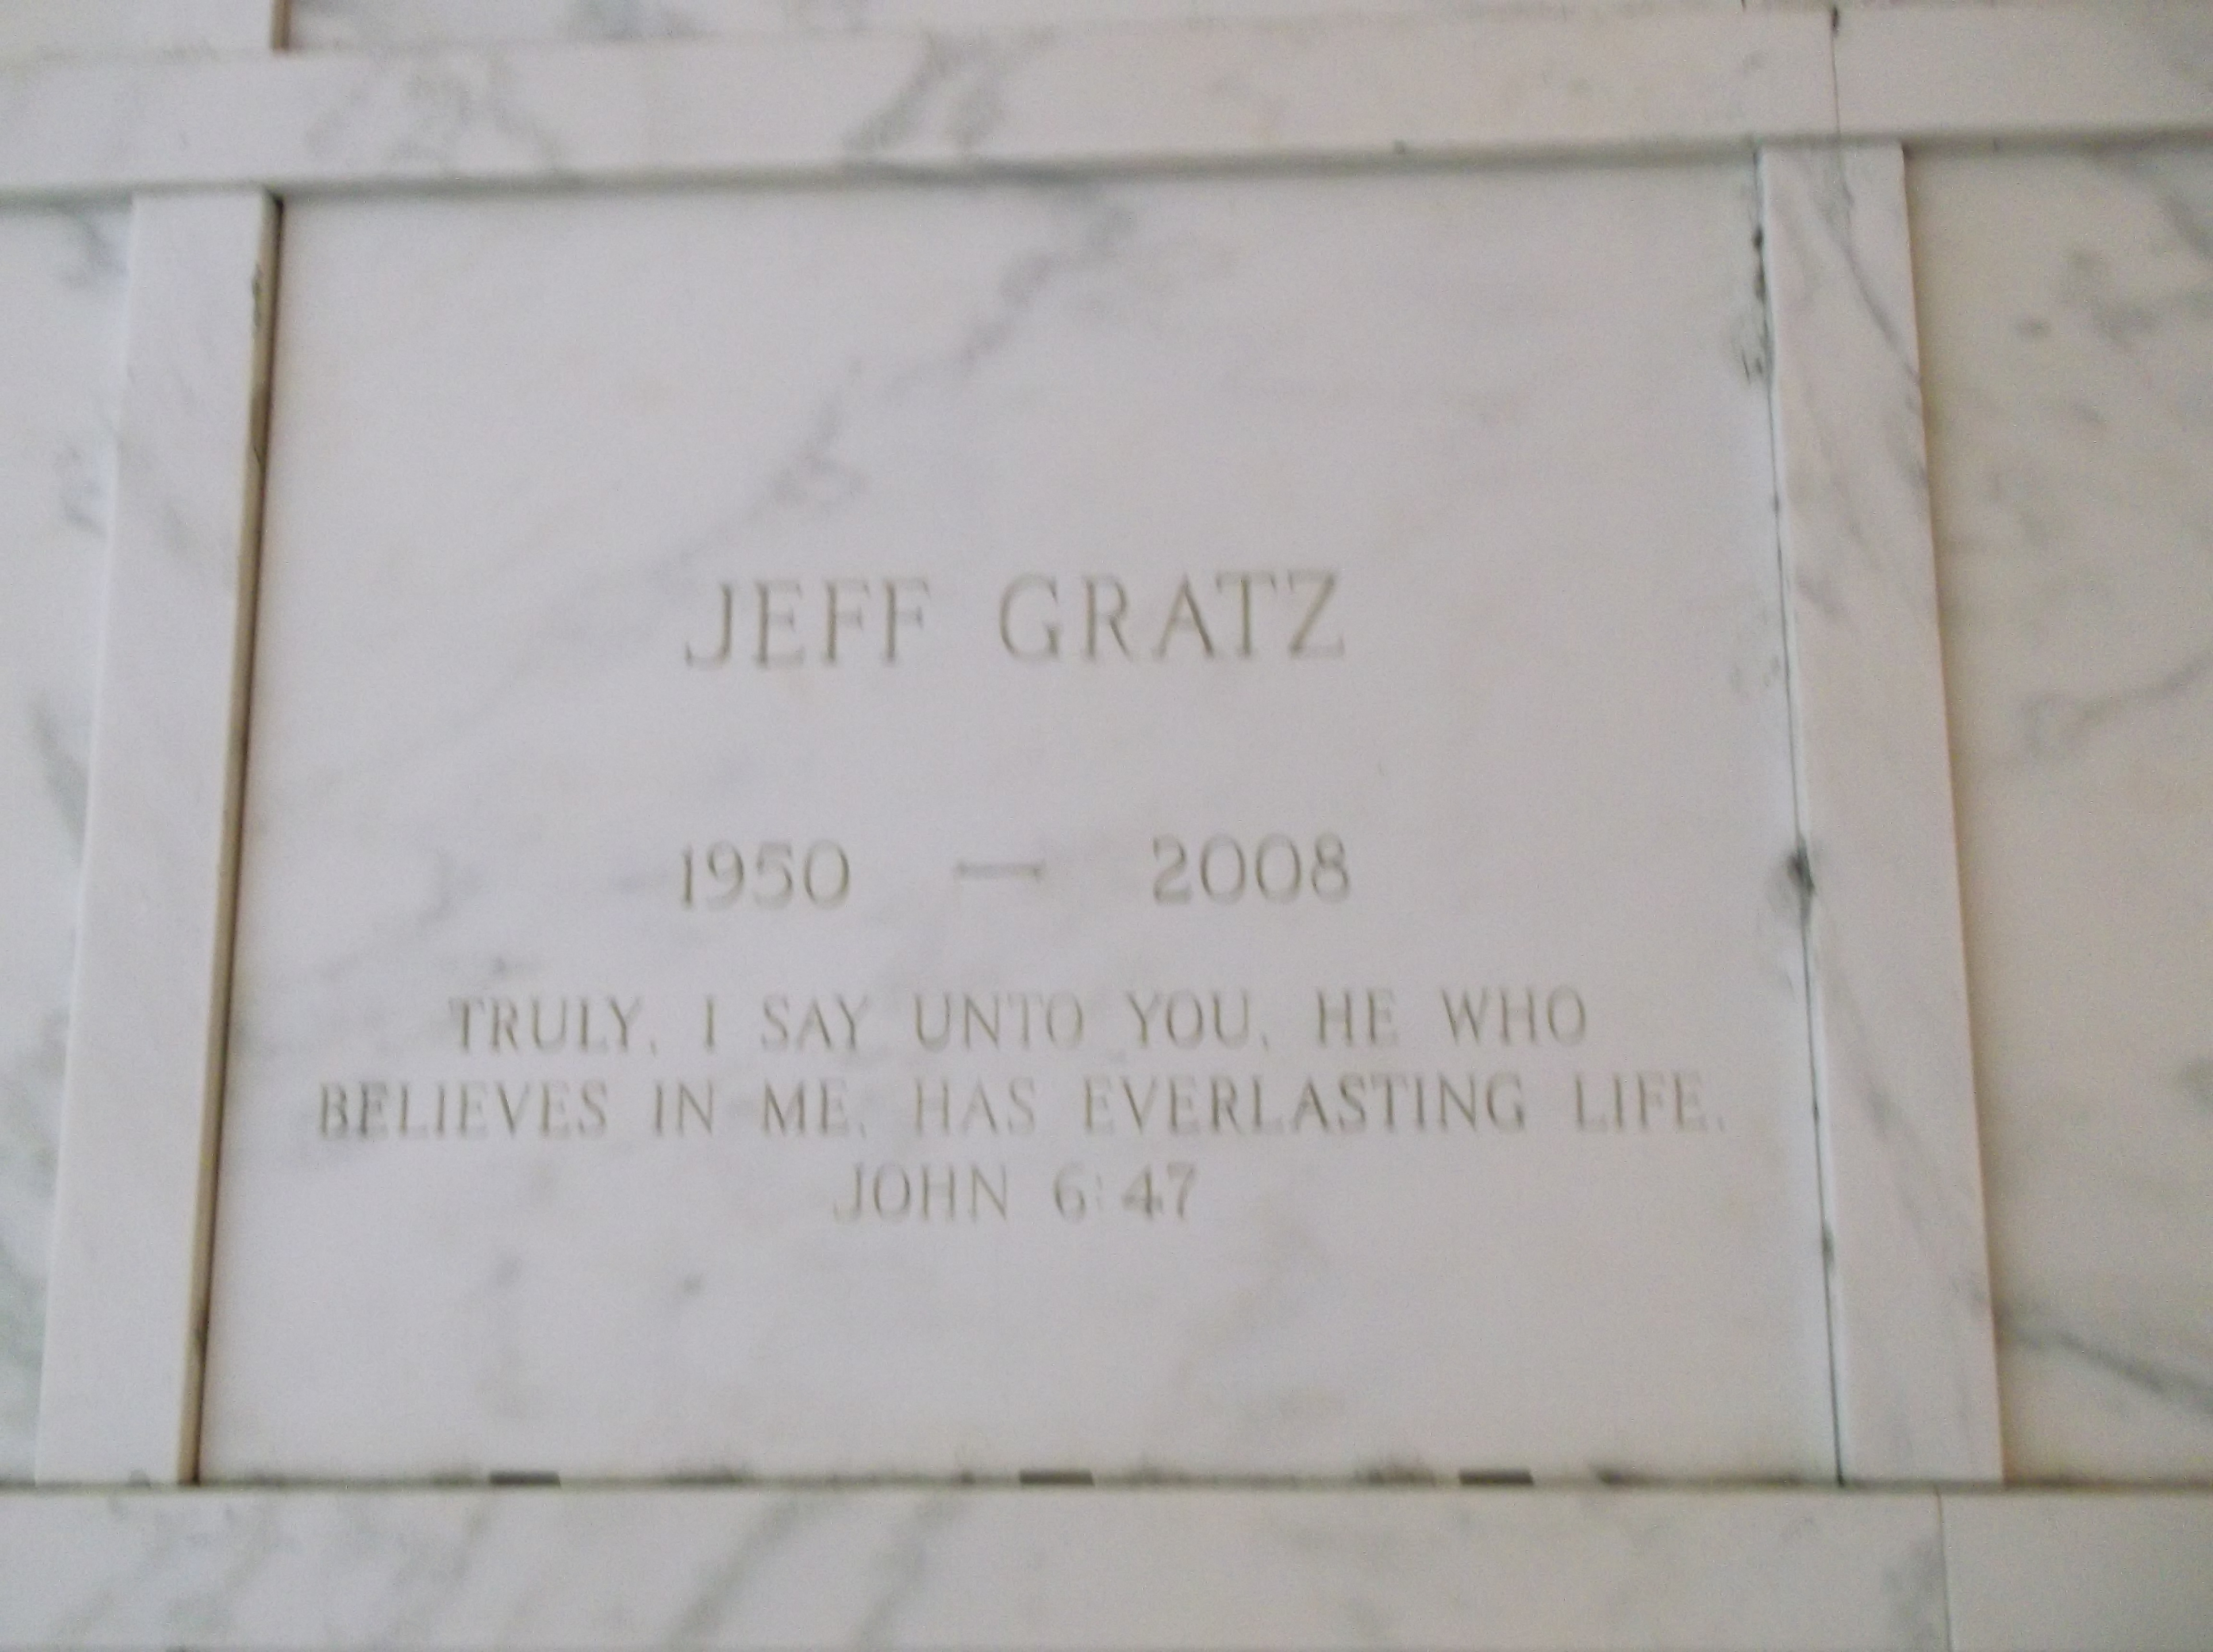 Jeff Gratz